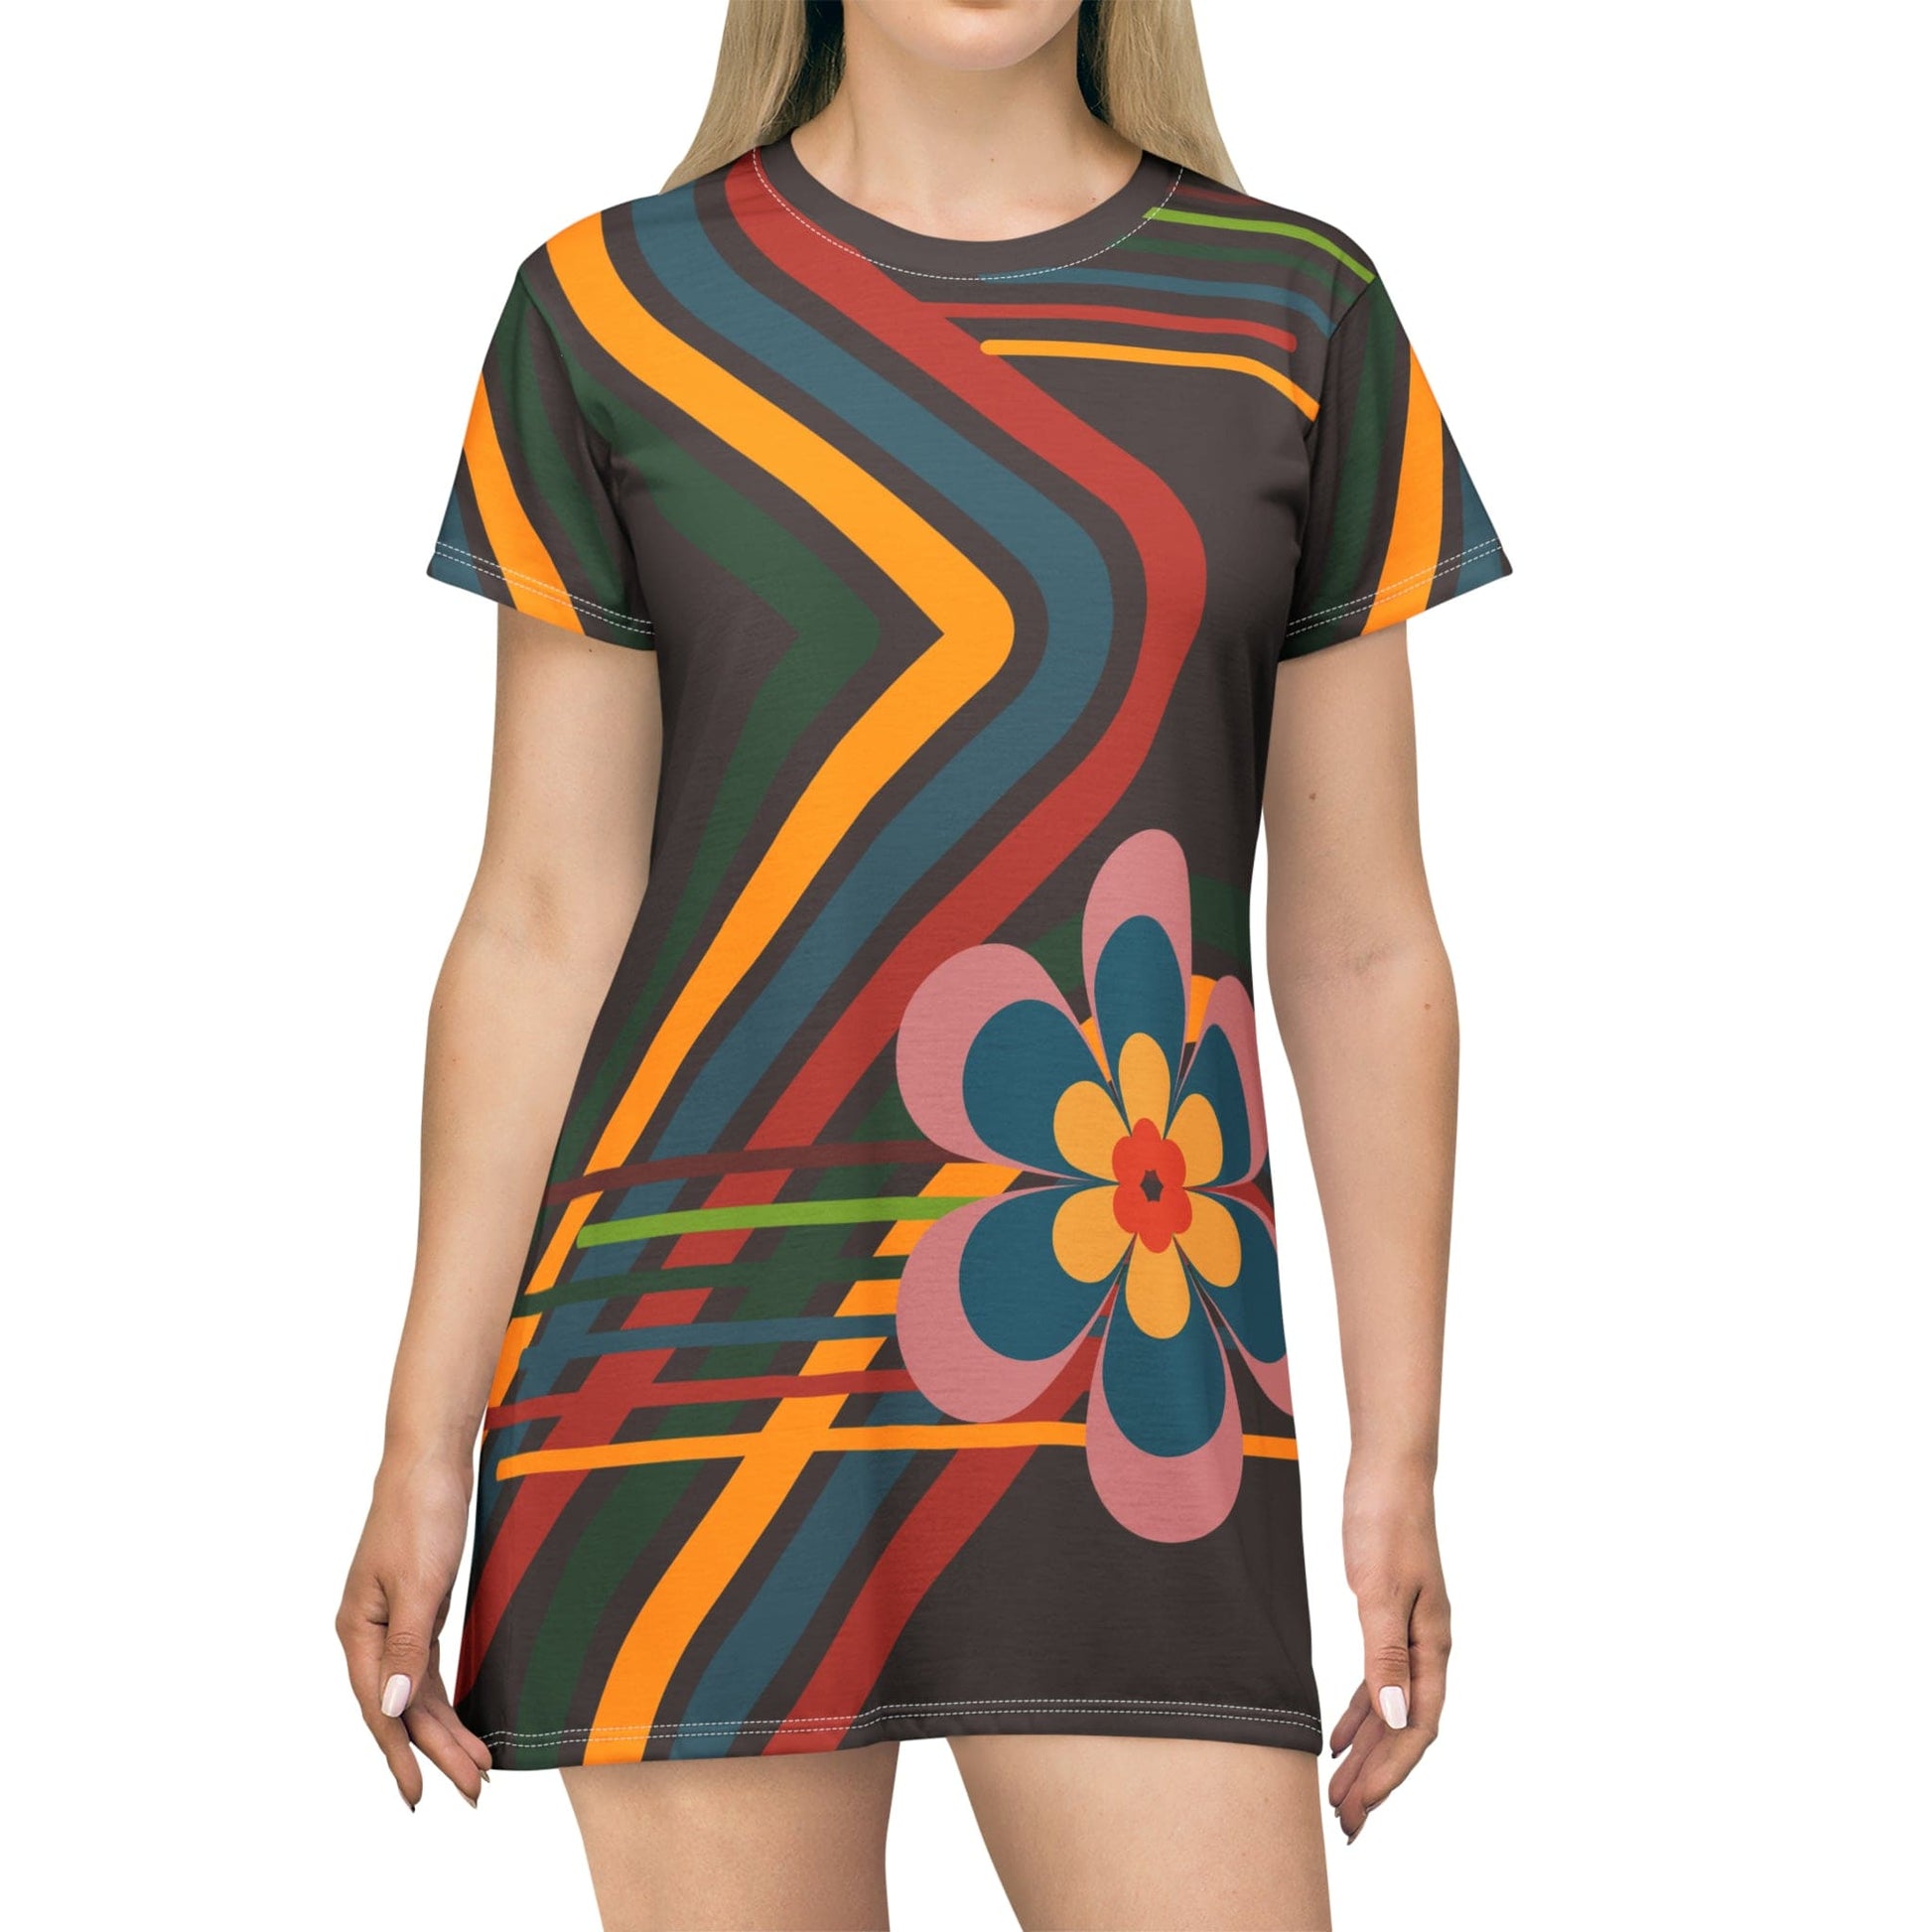 Kate McEnroe New York Mid Mod Retro Flower Power Party Dress, Brown, Orange, Yellow, Blue Geometric Mid Century Modern T-Shirt Dress Dresses XS 21606554111726217291